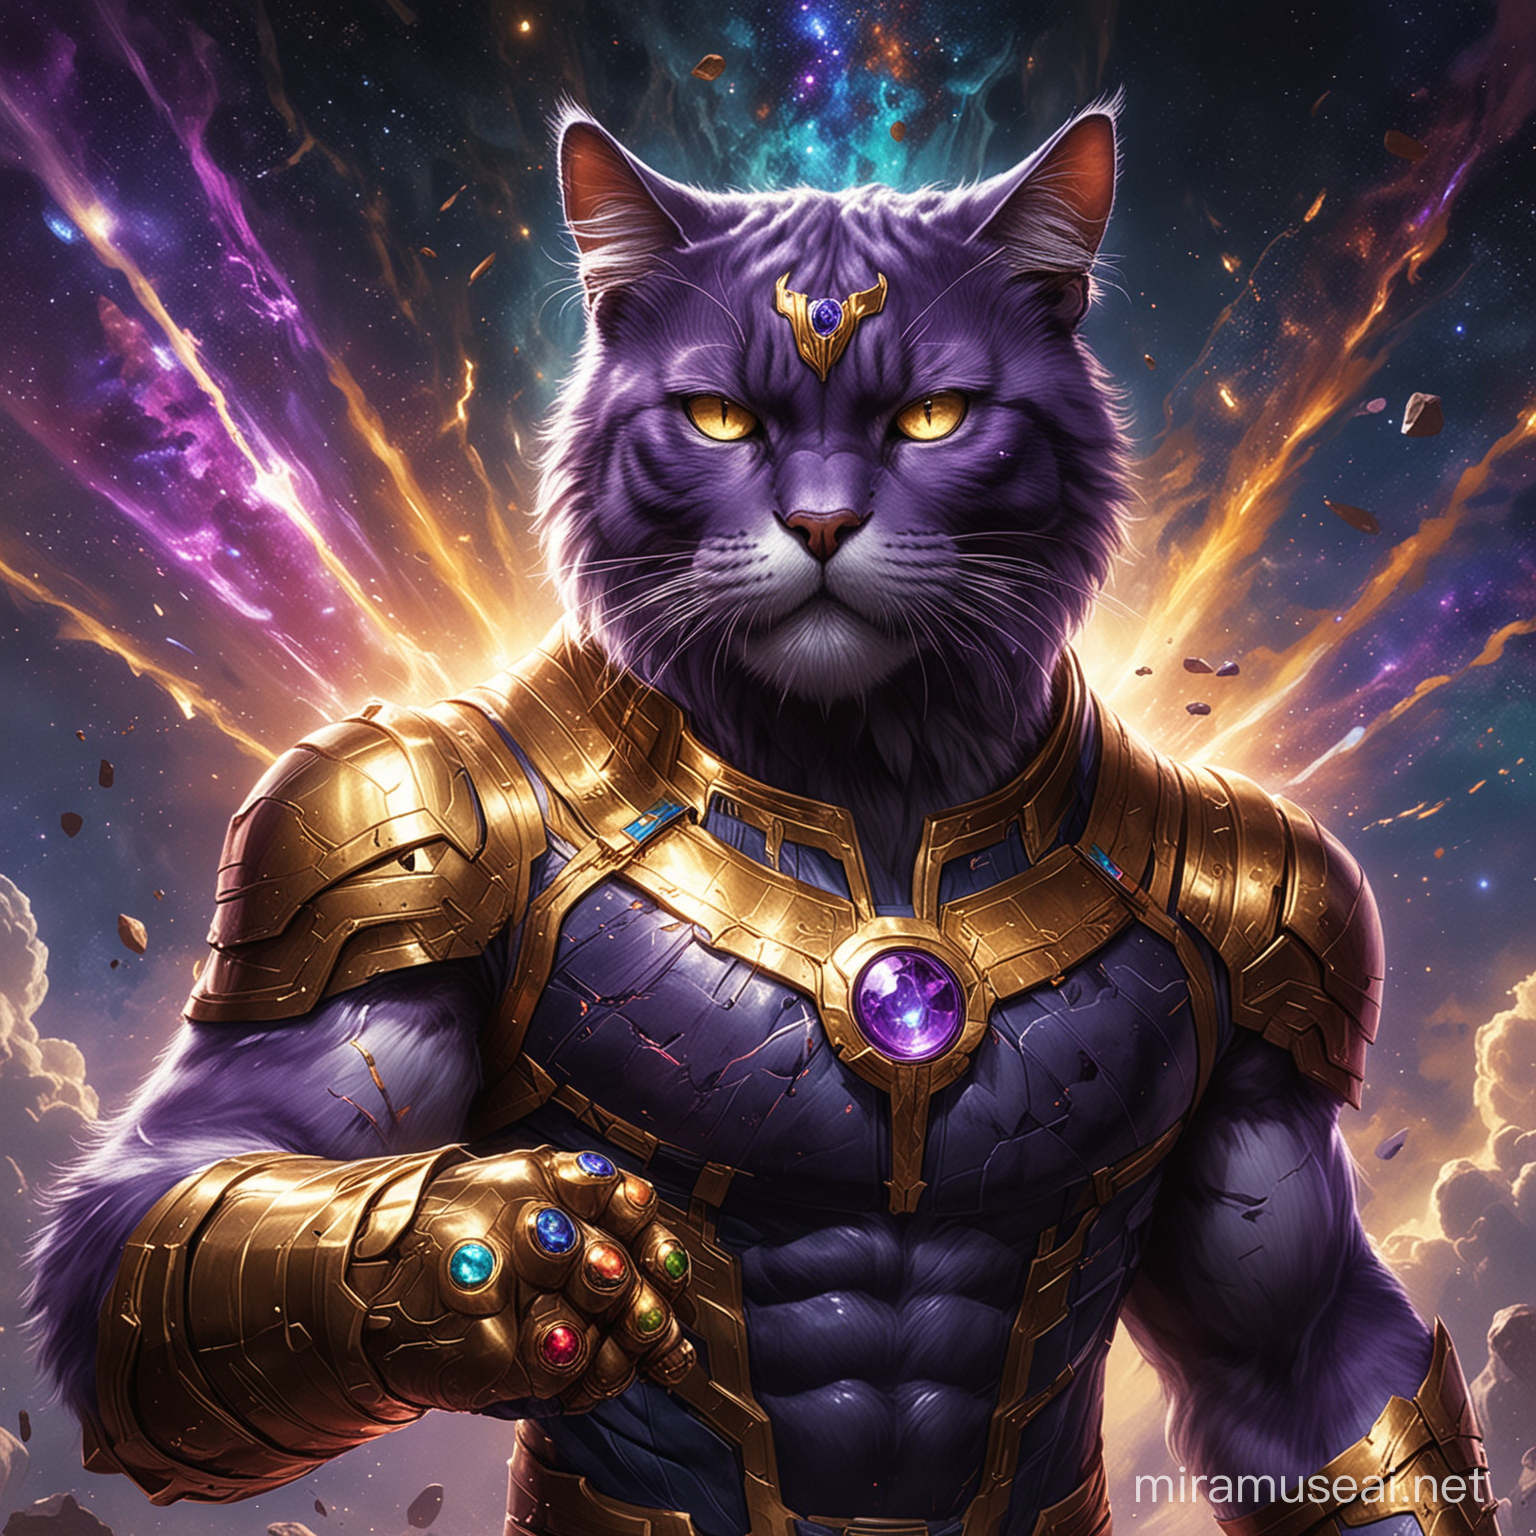 Regal Thanos Cat with Infinity Gauntlet Majestic Feline Dominance